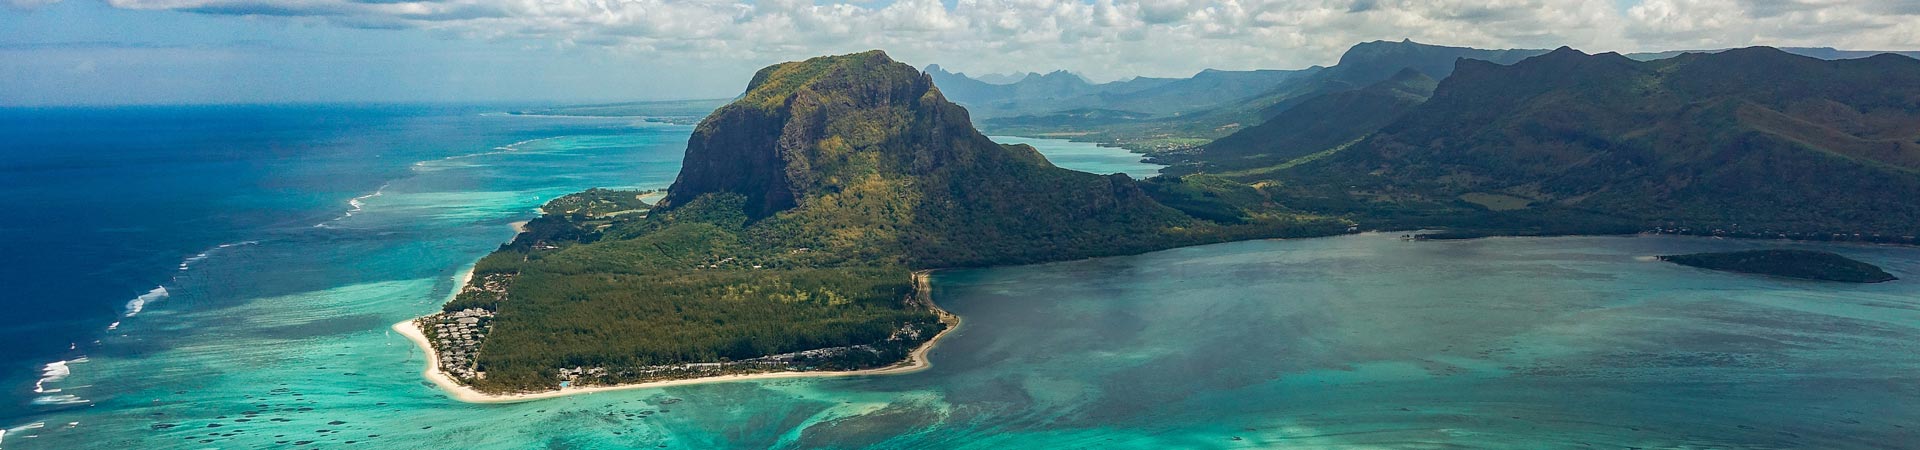 The coastline around Mauritius